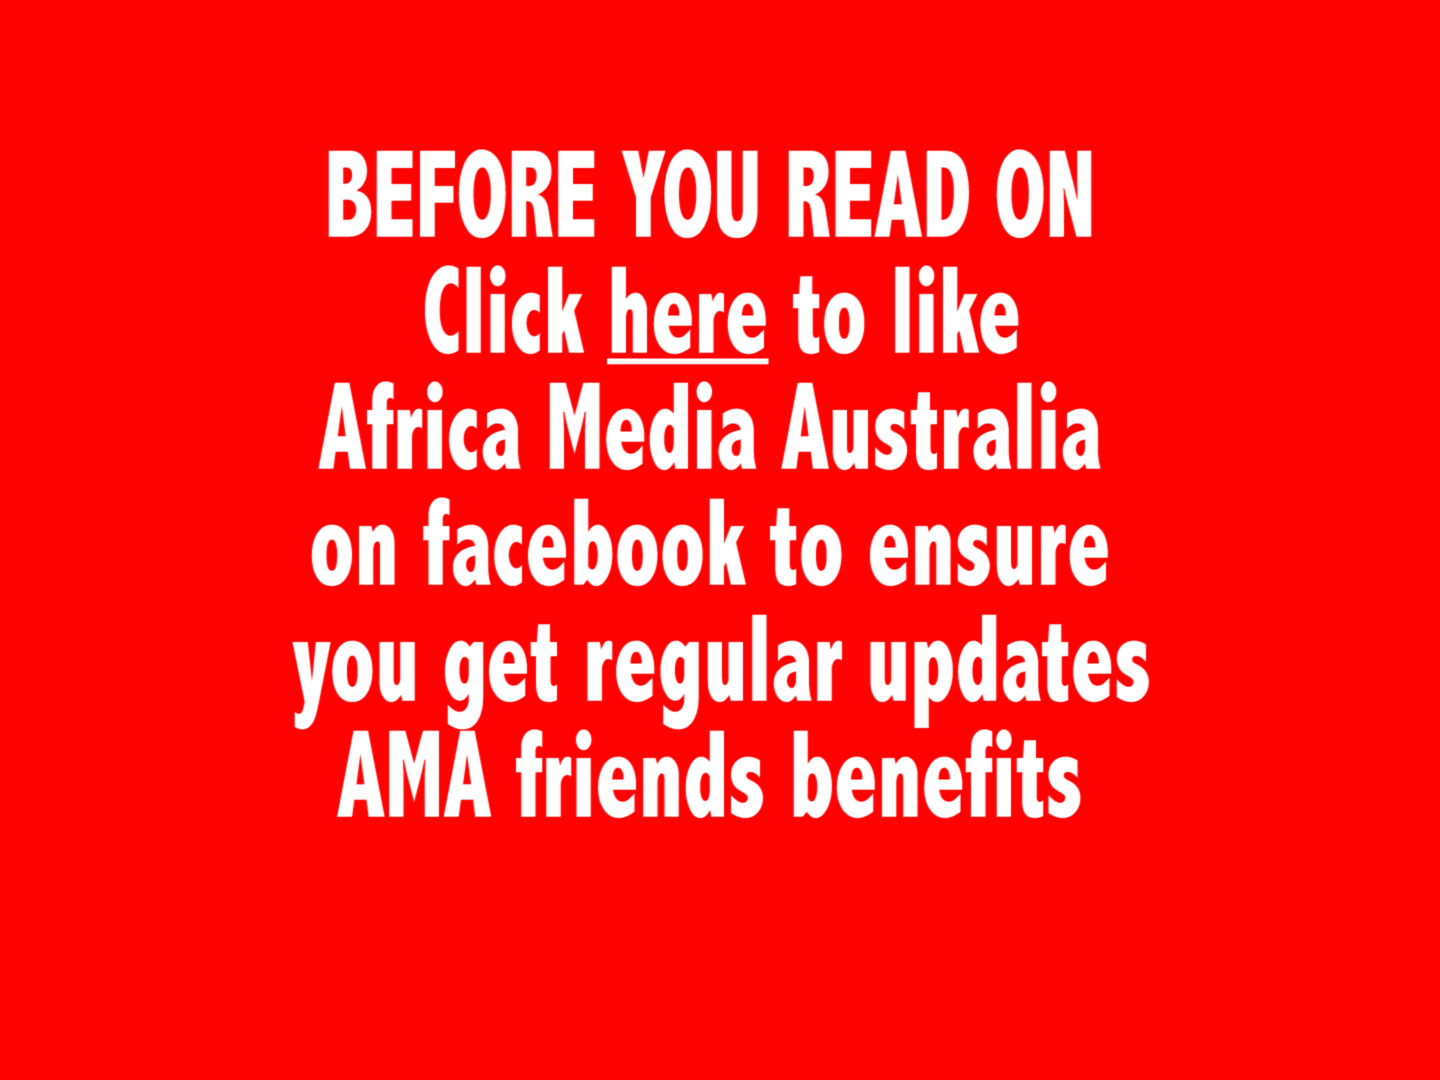 FB& FRIENDS BENEFITS2